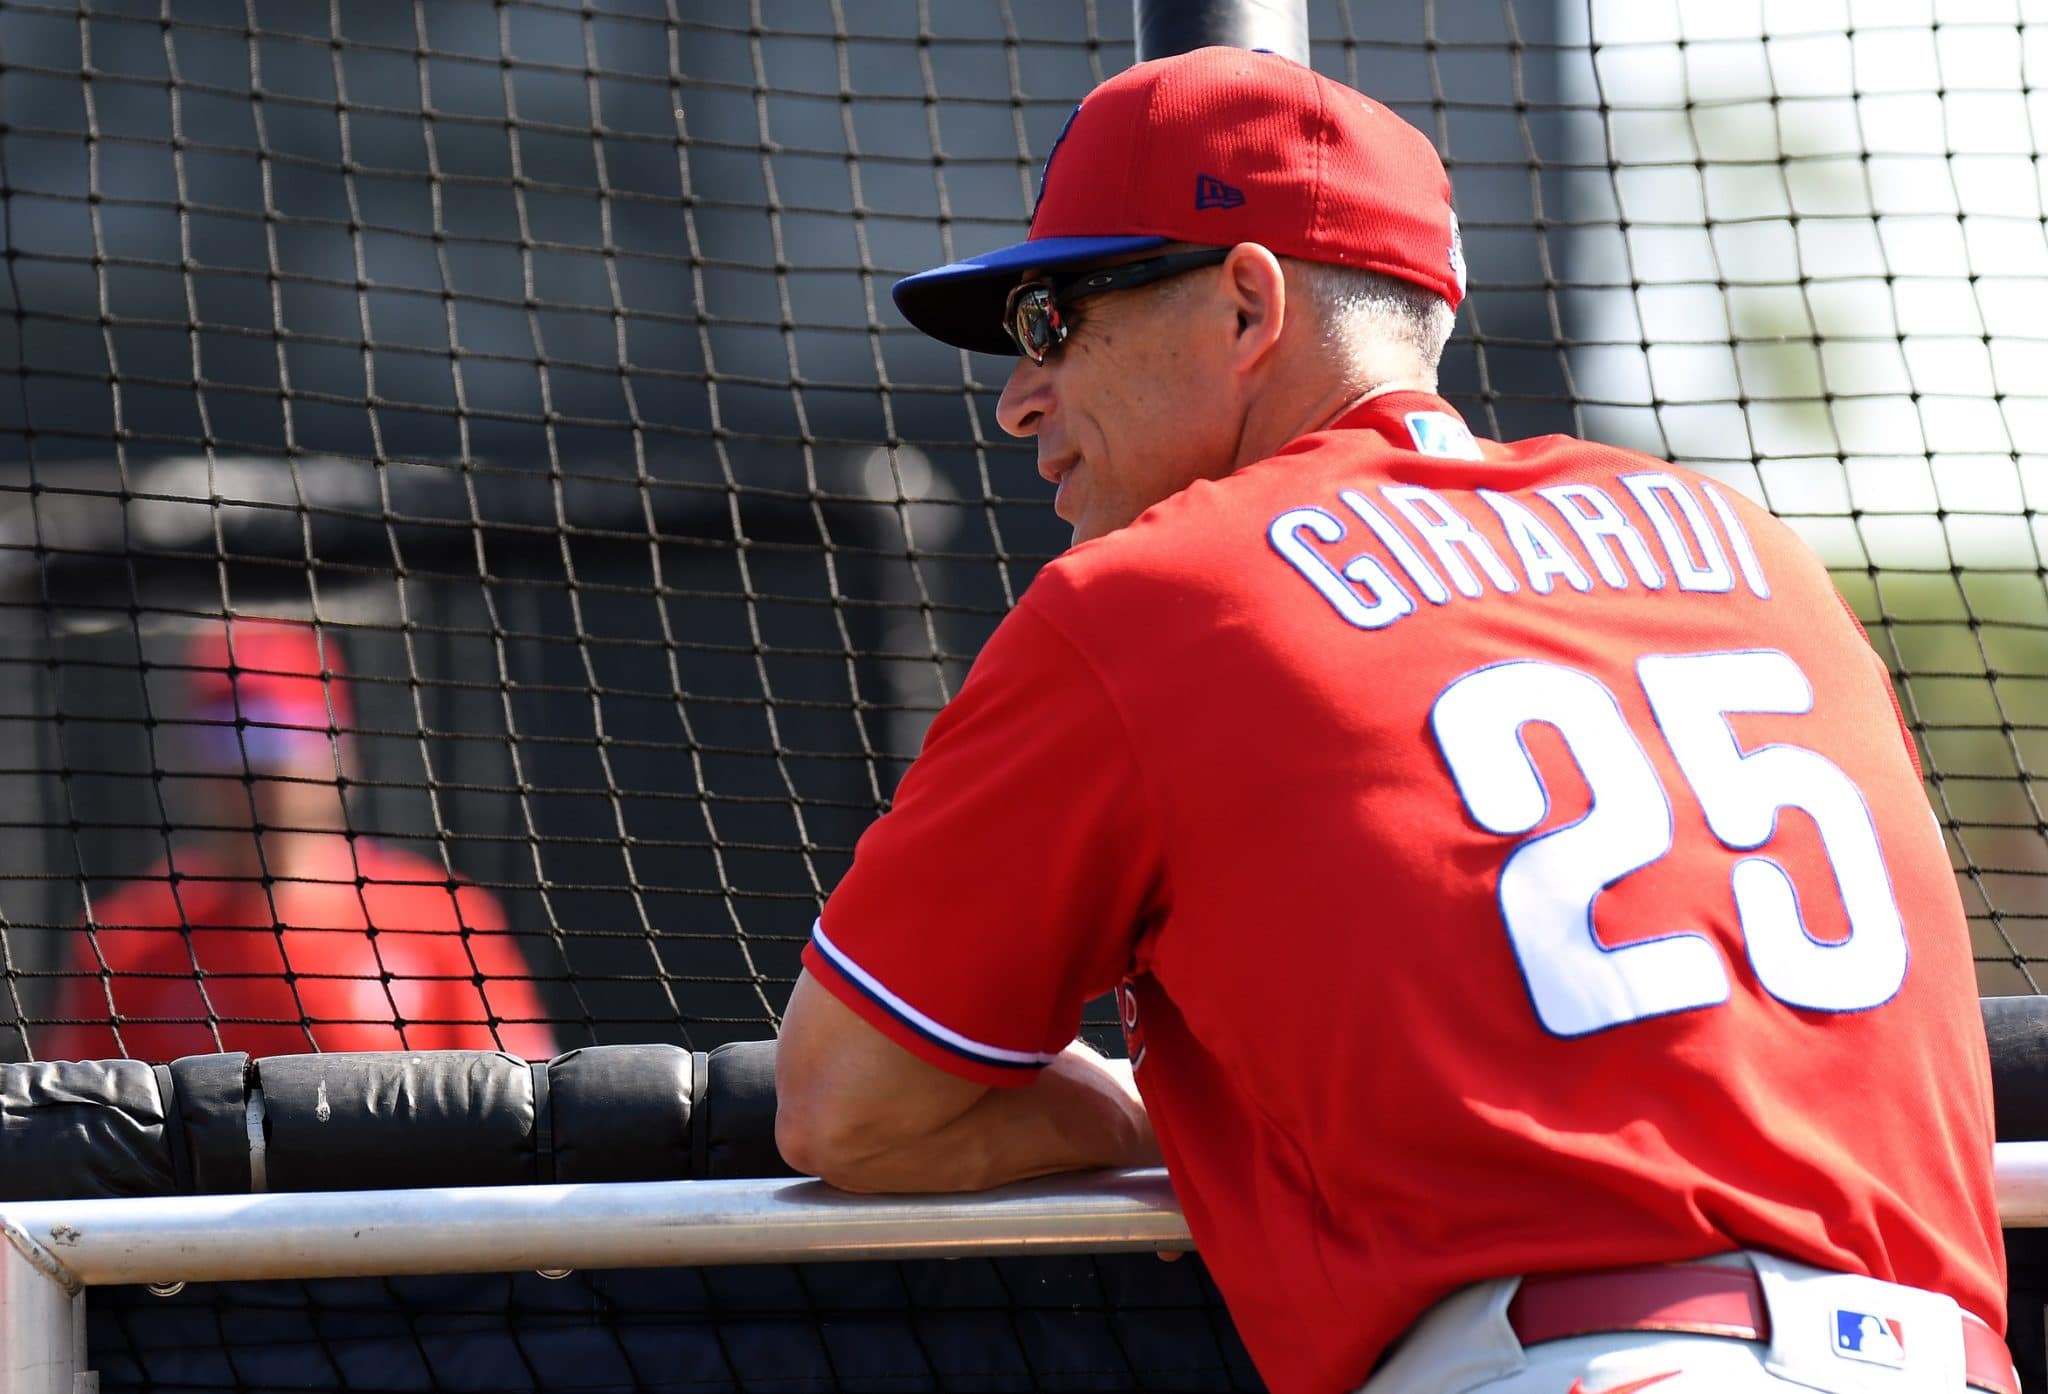 Joe Girardi Has Heard “Some Chatter” About July 1st MLB Return